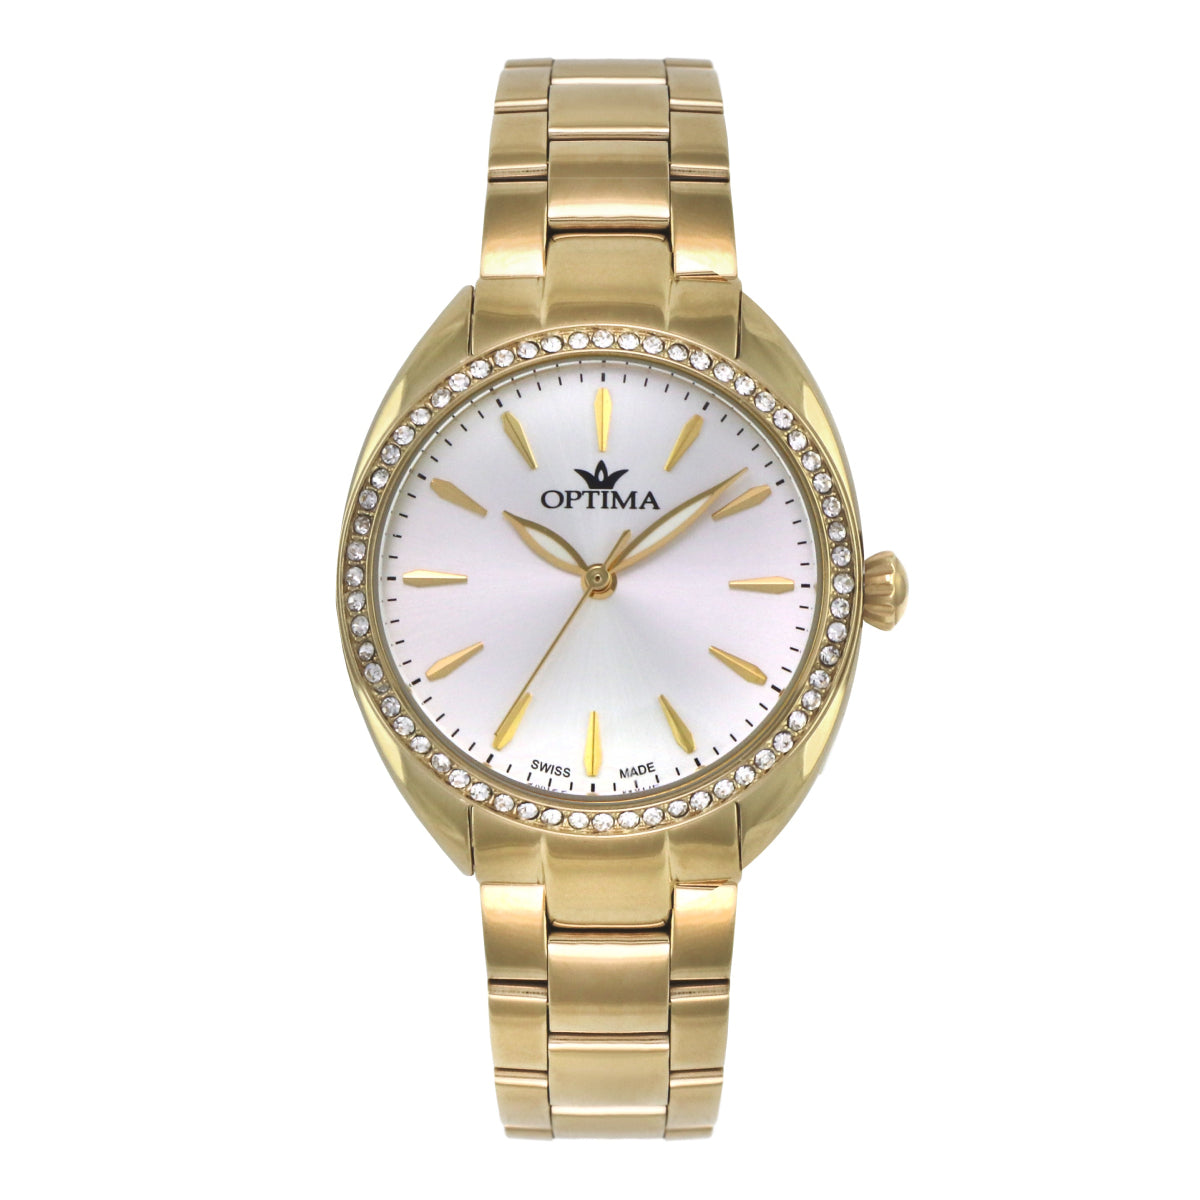 Optima Women's Swiss Quartz Watch with White Dial - OPT-0032